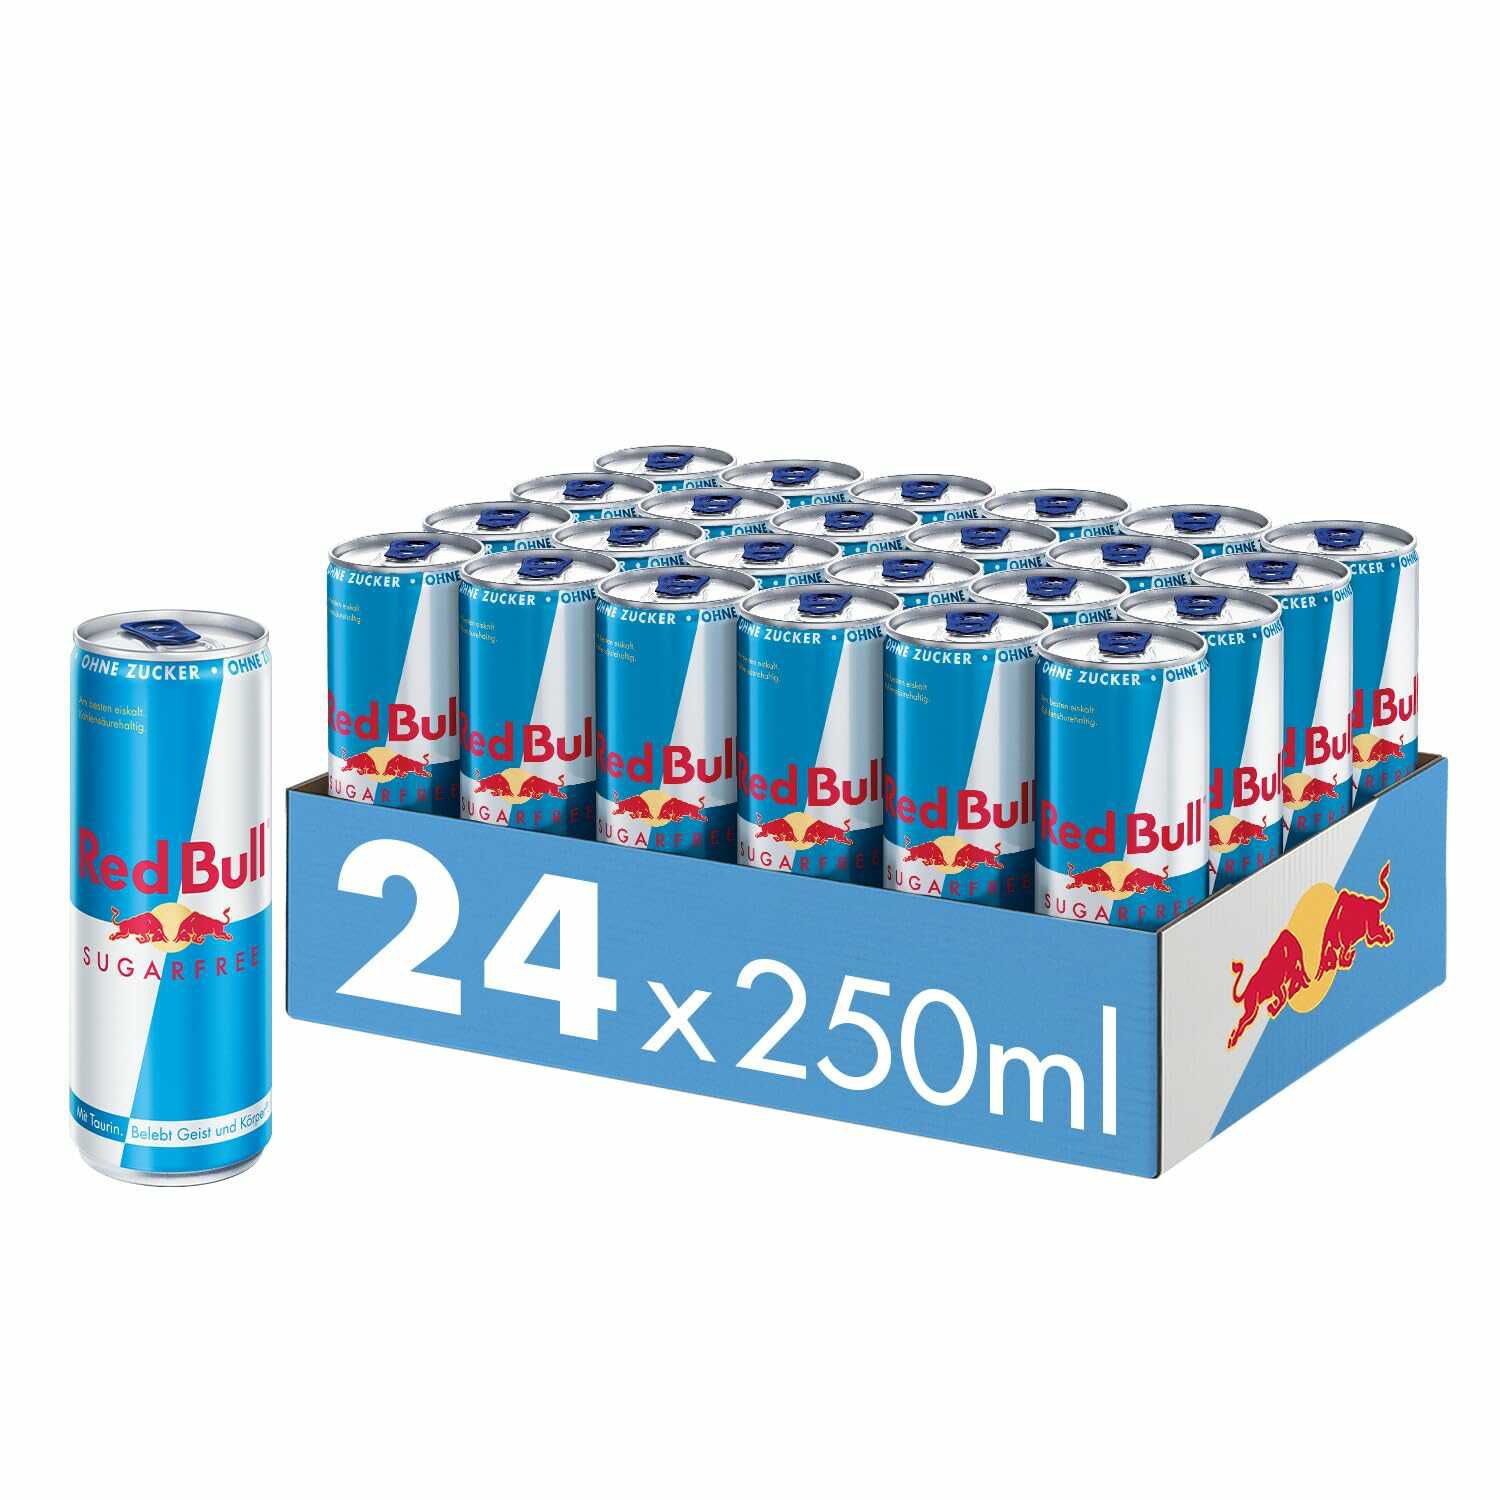 Red Bull Energy Drink Sugarfree 24 x 250 ml für 20,40€ statt 31,99€